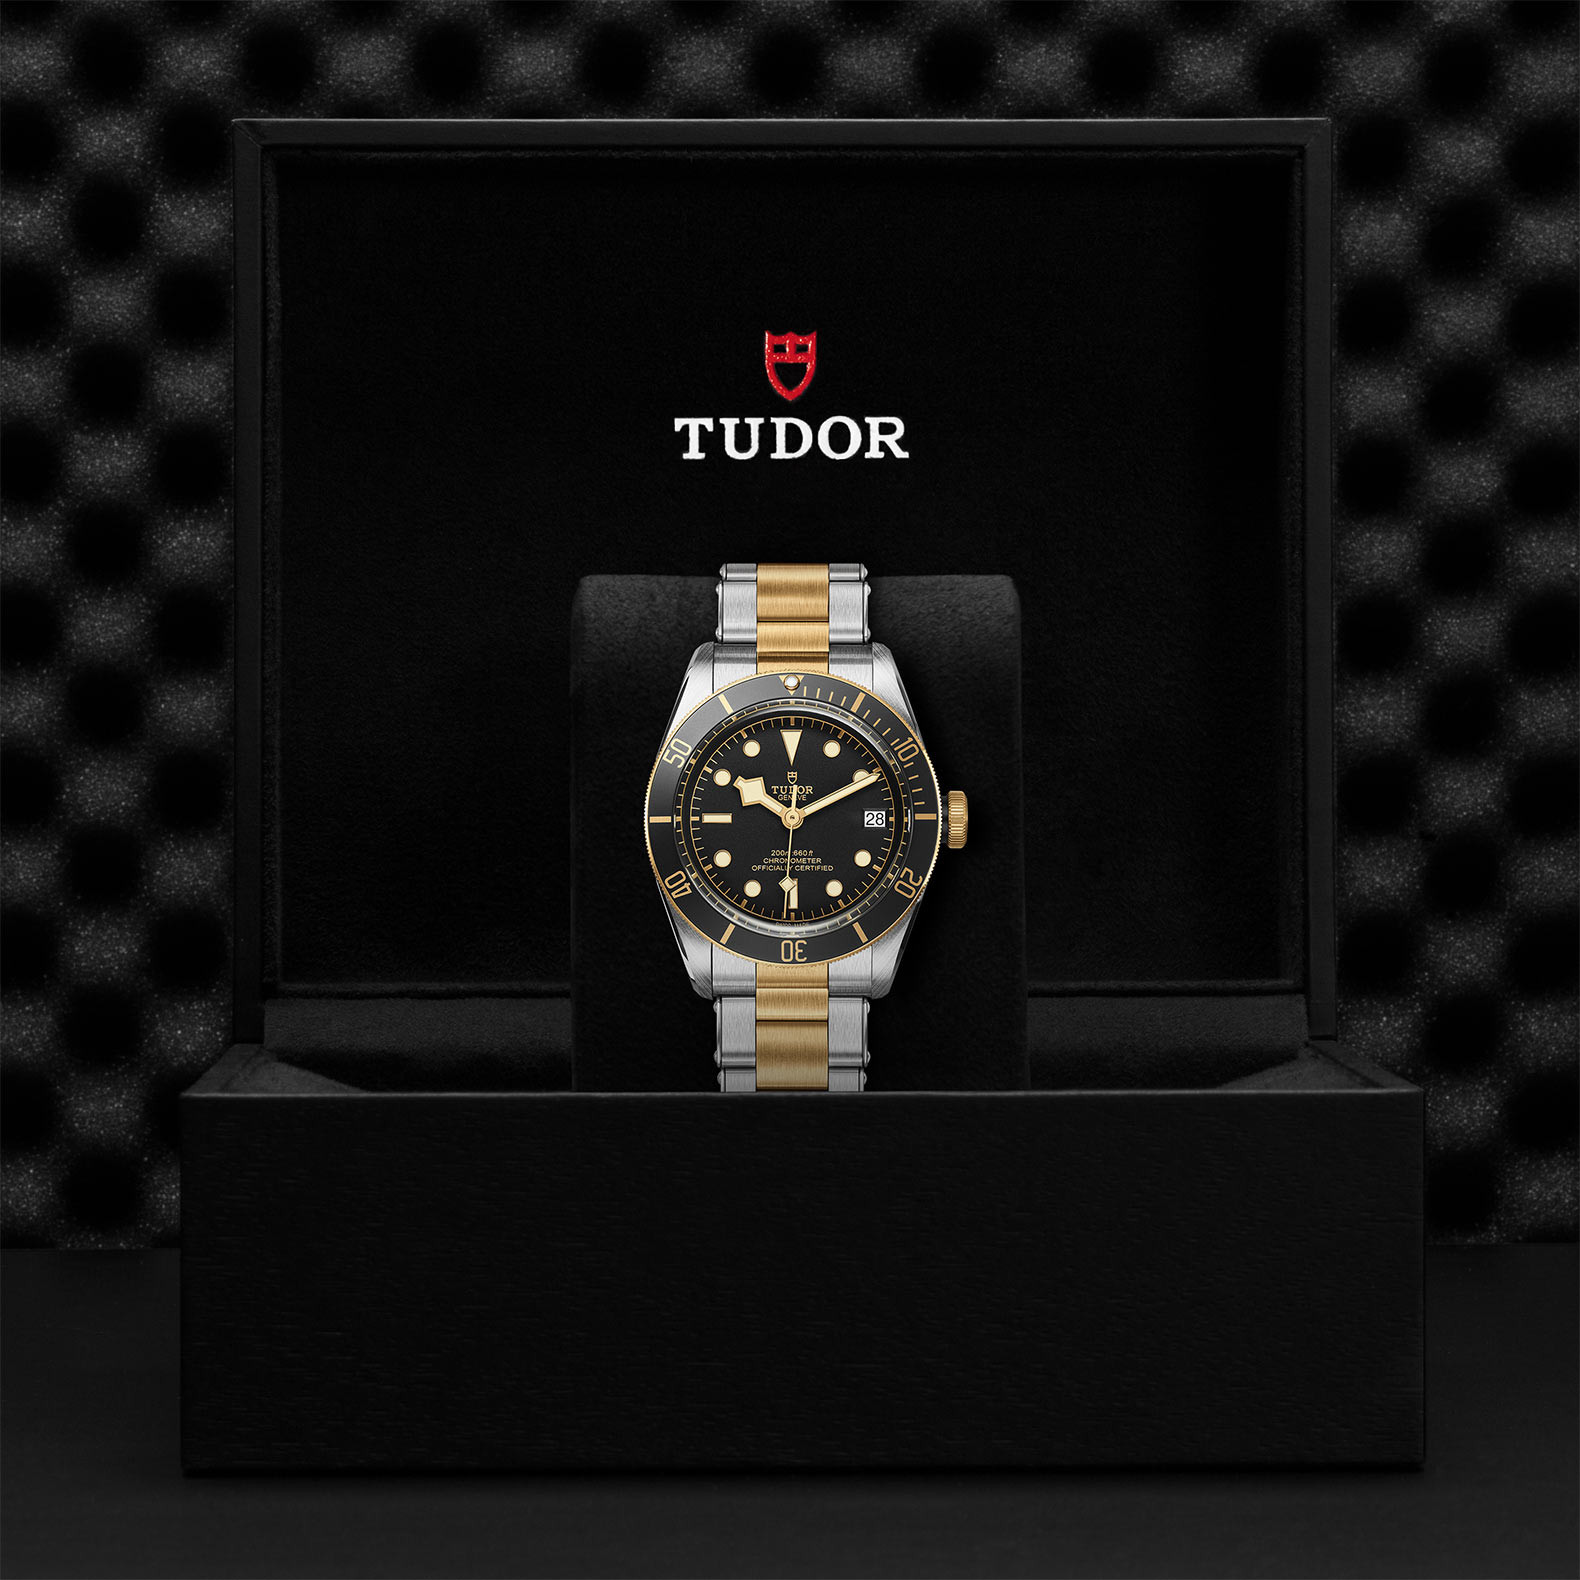 TUDOR Black Bay S&G Watch in Presentation Box